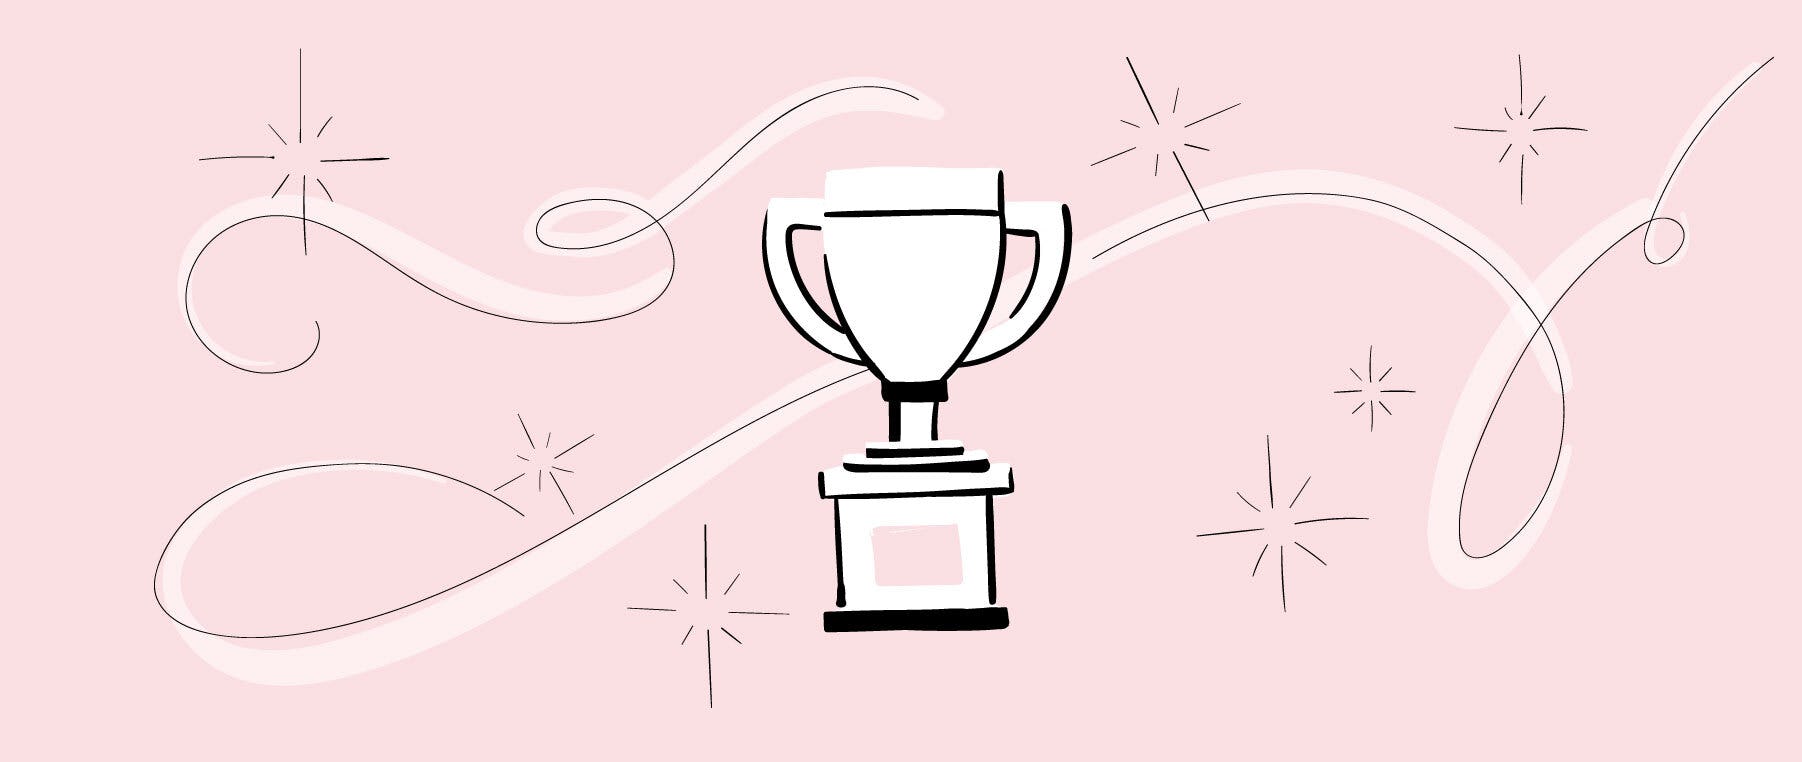 Pleo ganadora del premio a startup del año